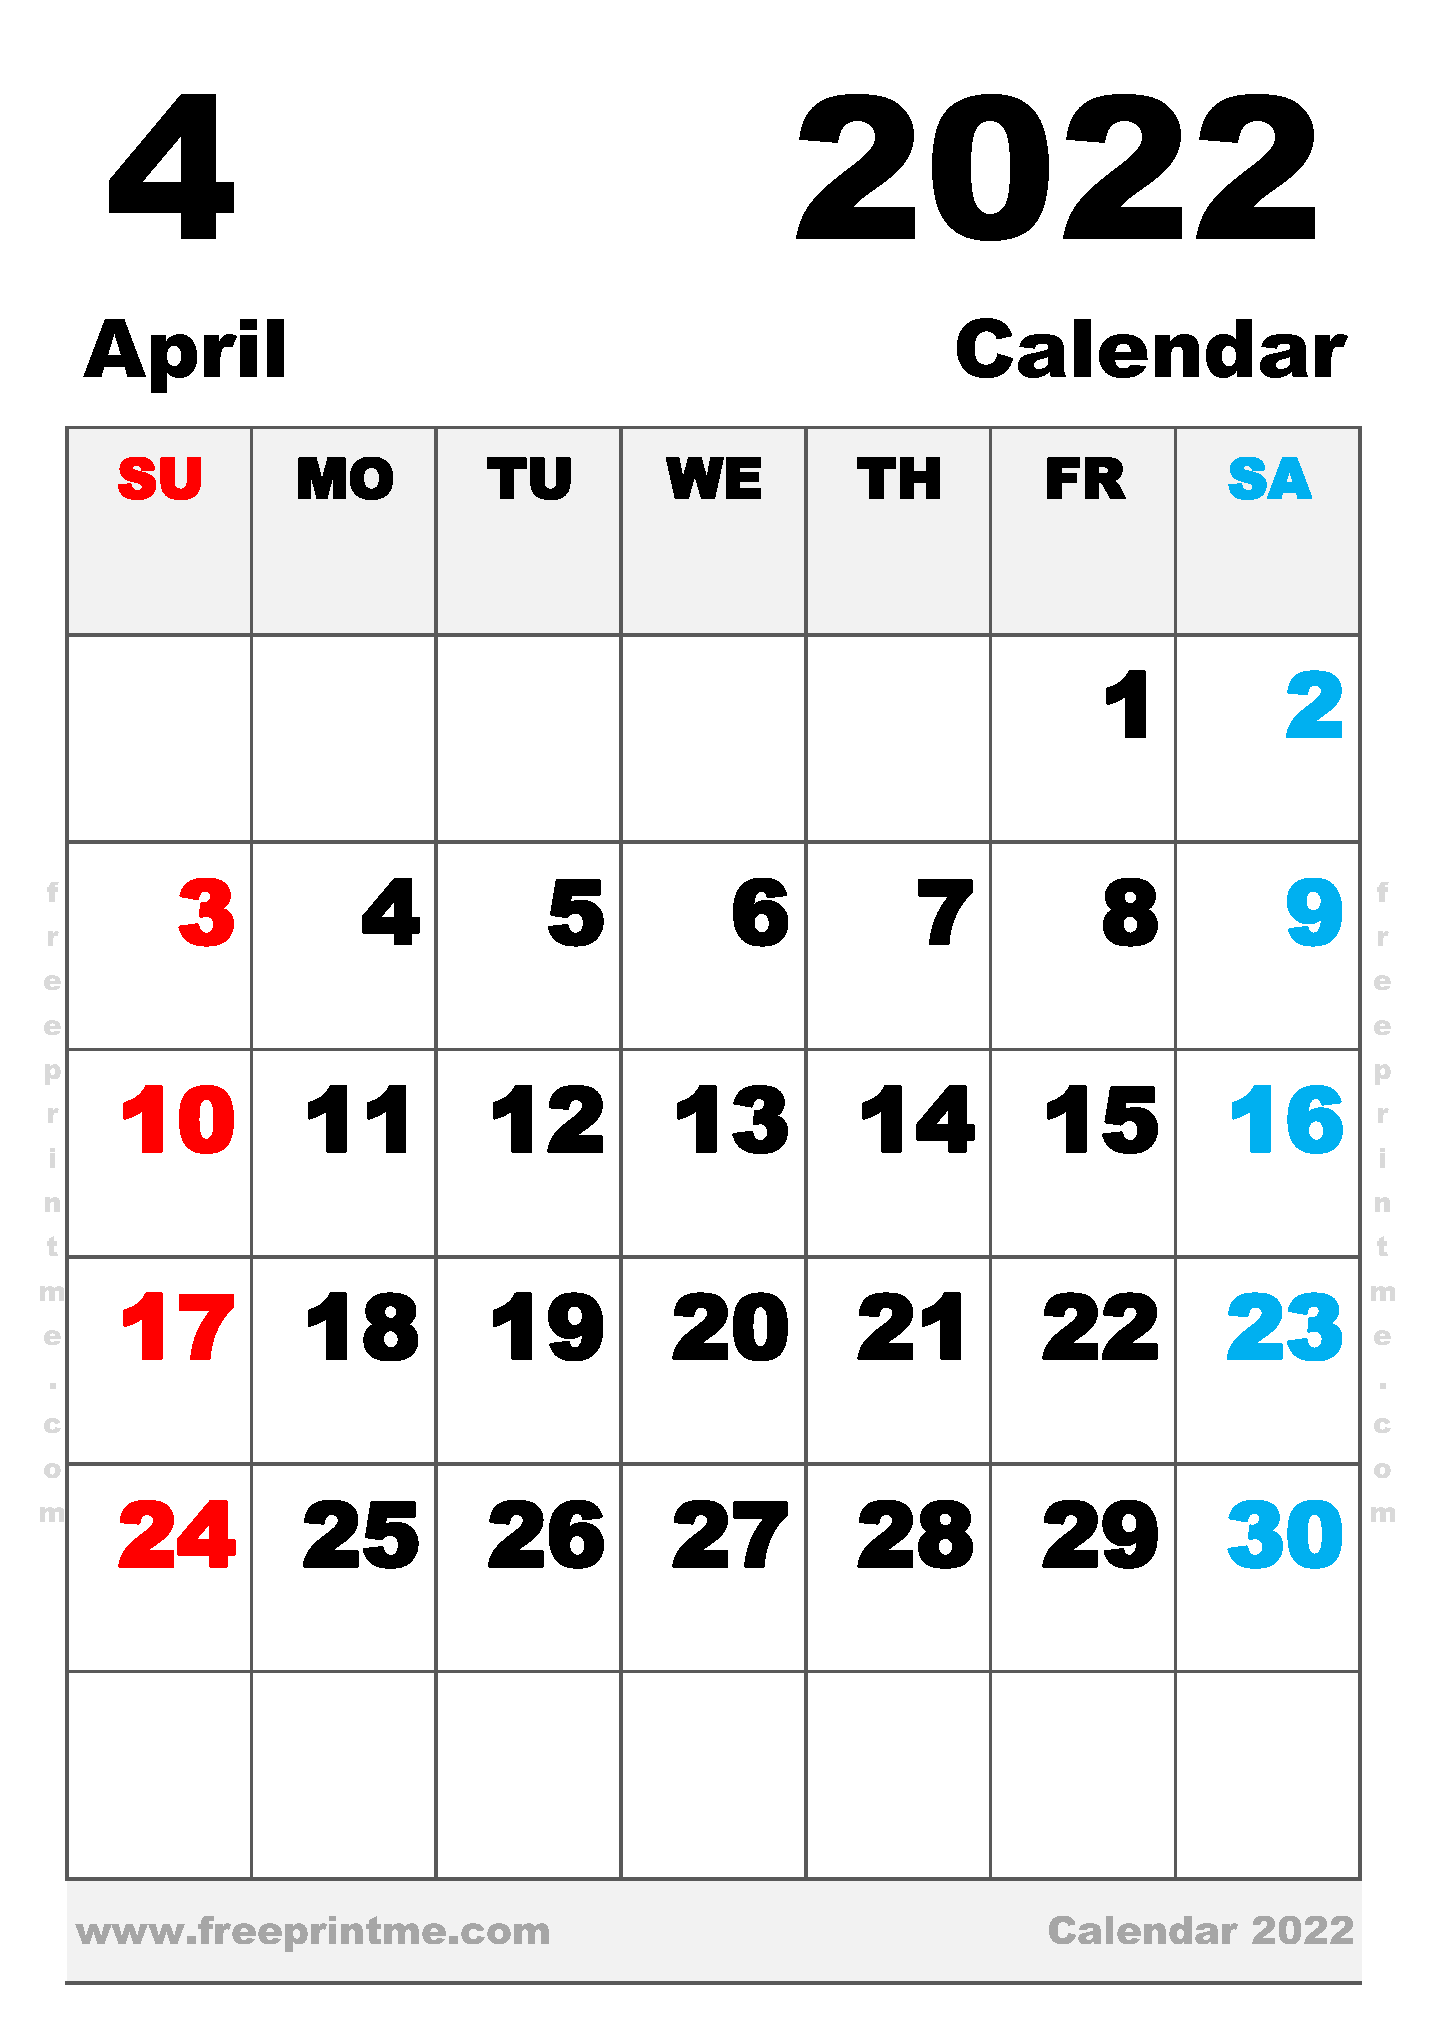 Free Printable April 2022 Calendar B5